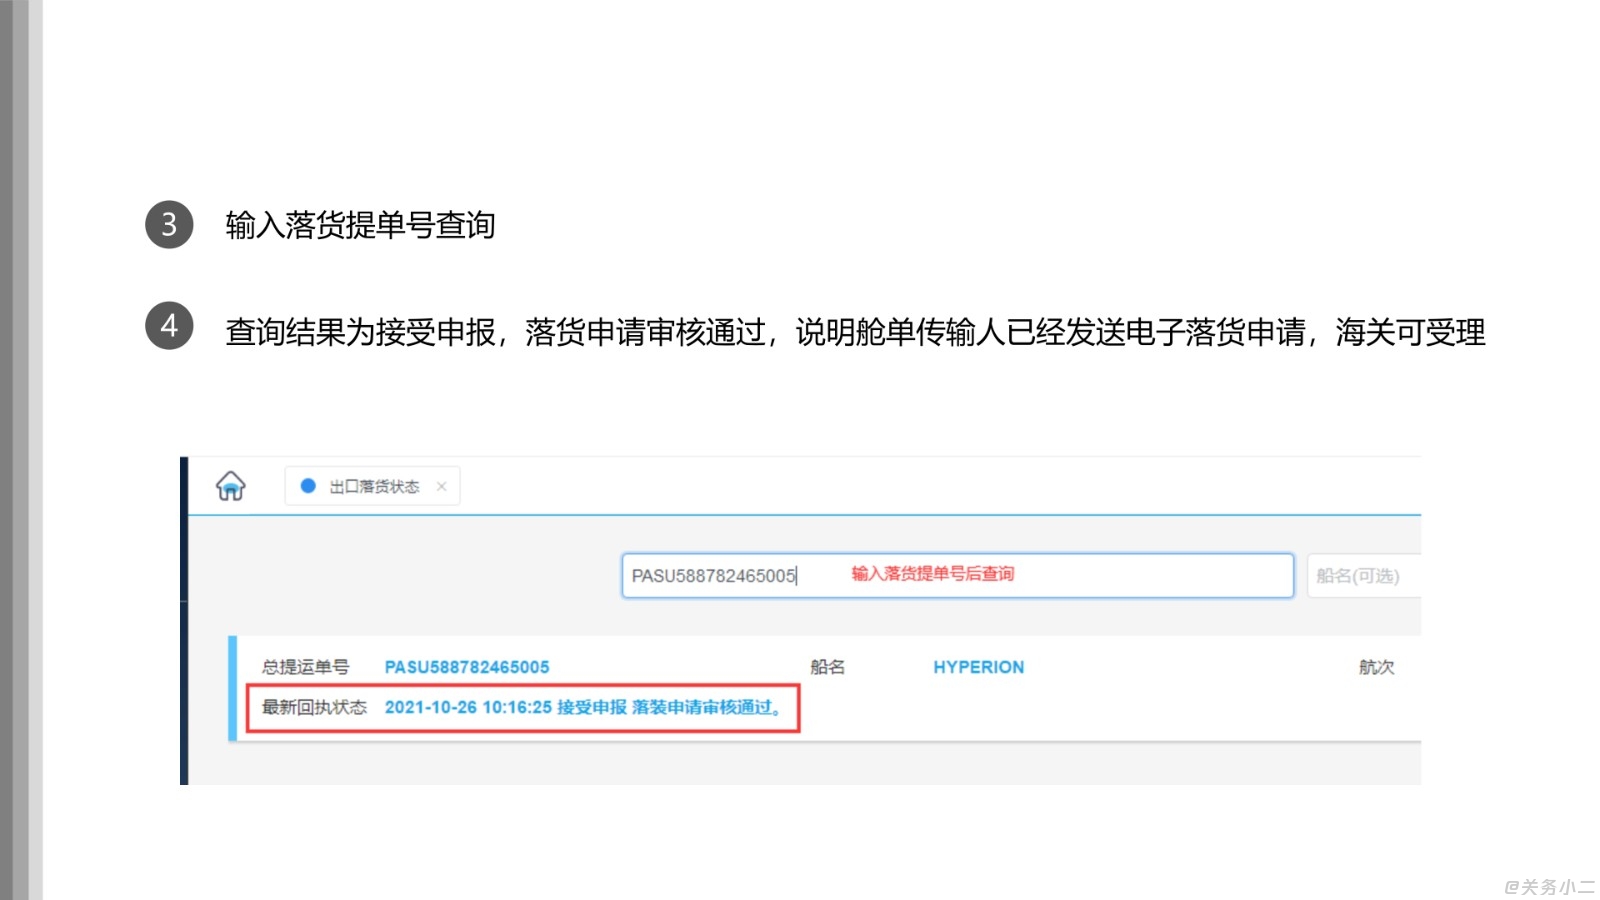 PPT-上海海关海运出口放行信息切换安排宣贯会_6.jpg